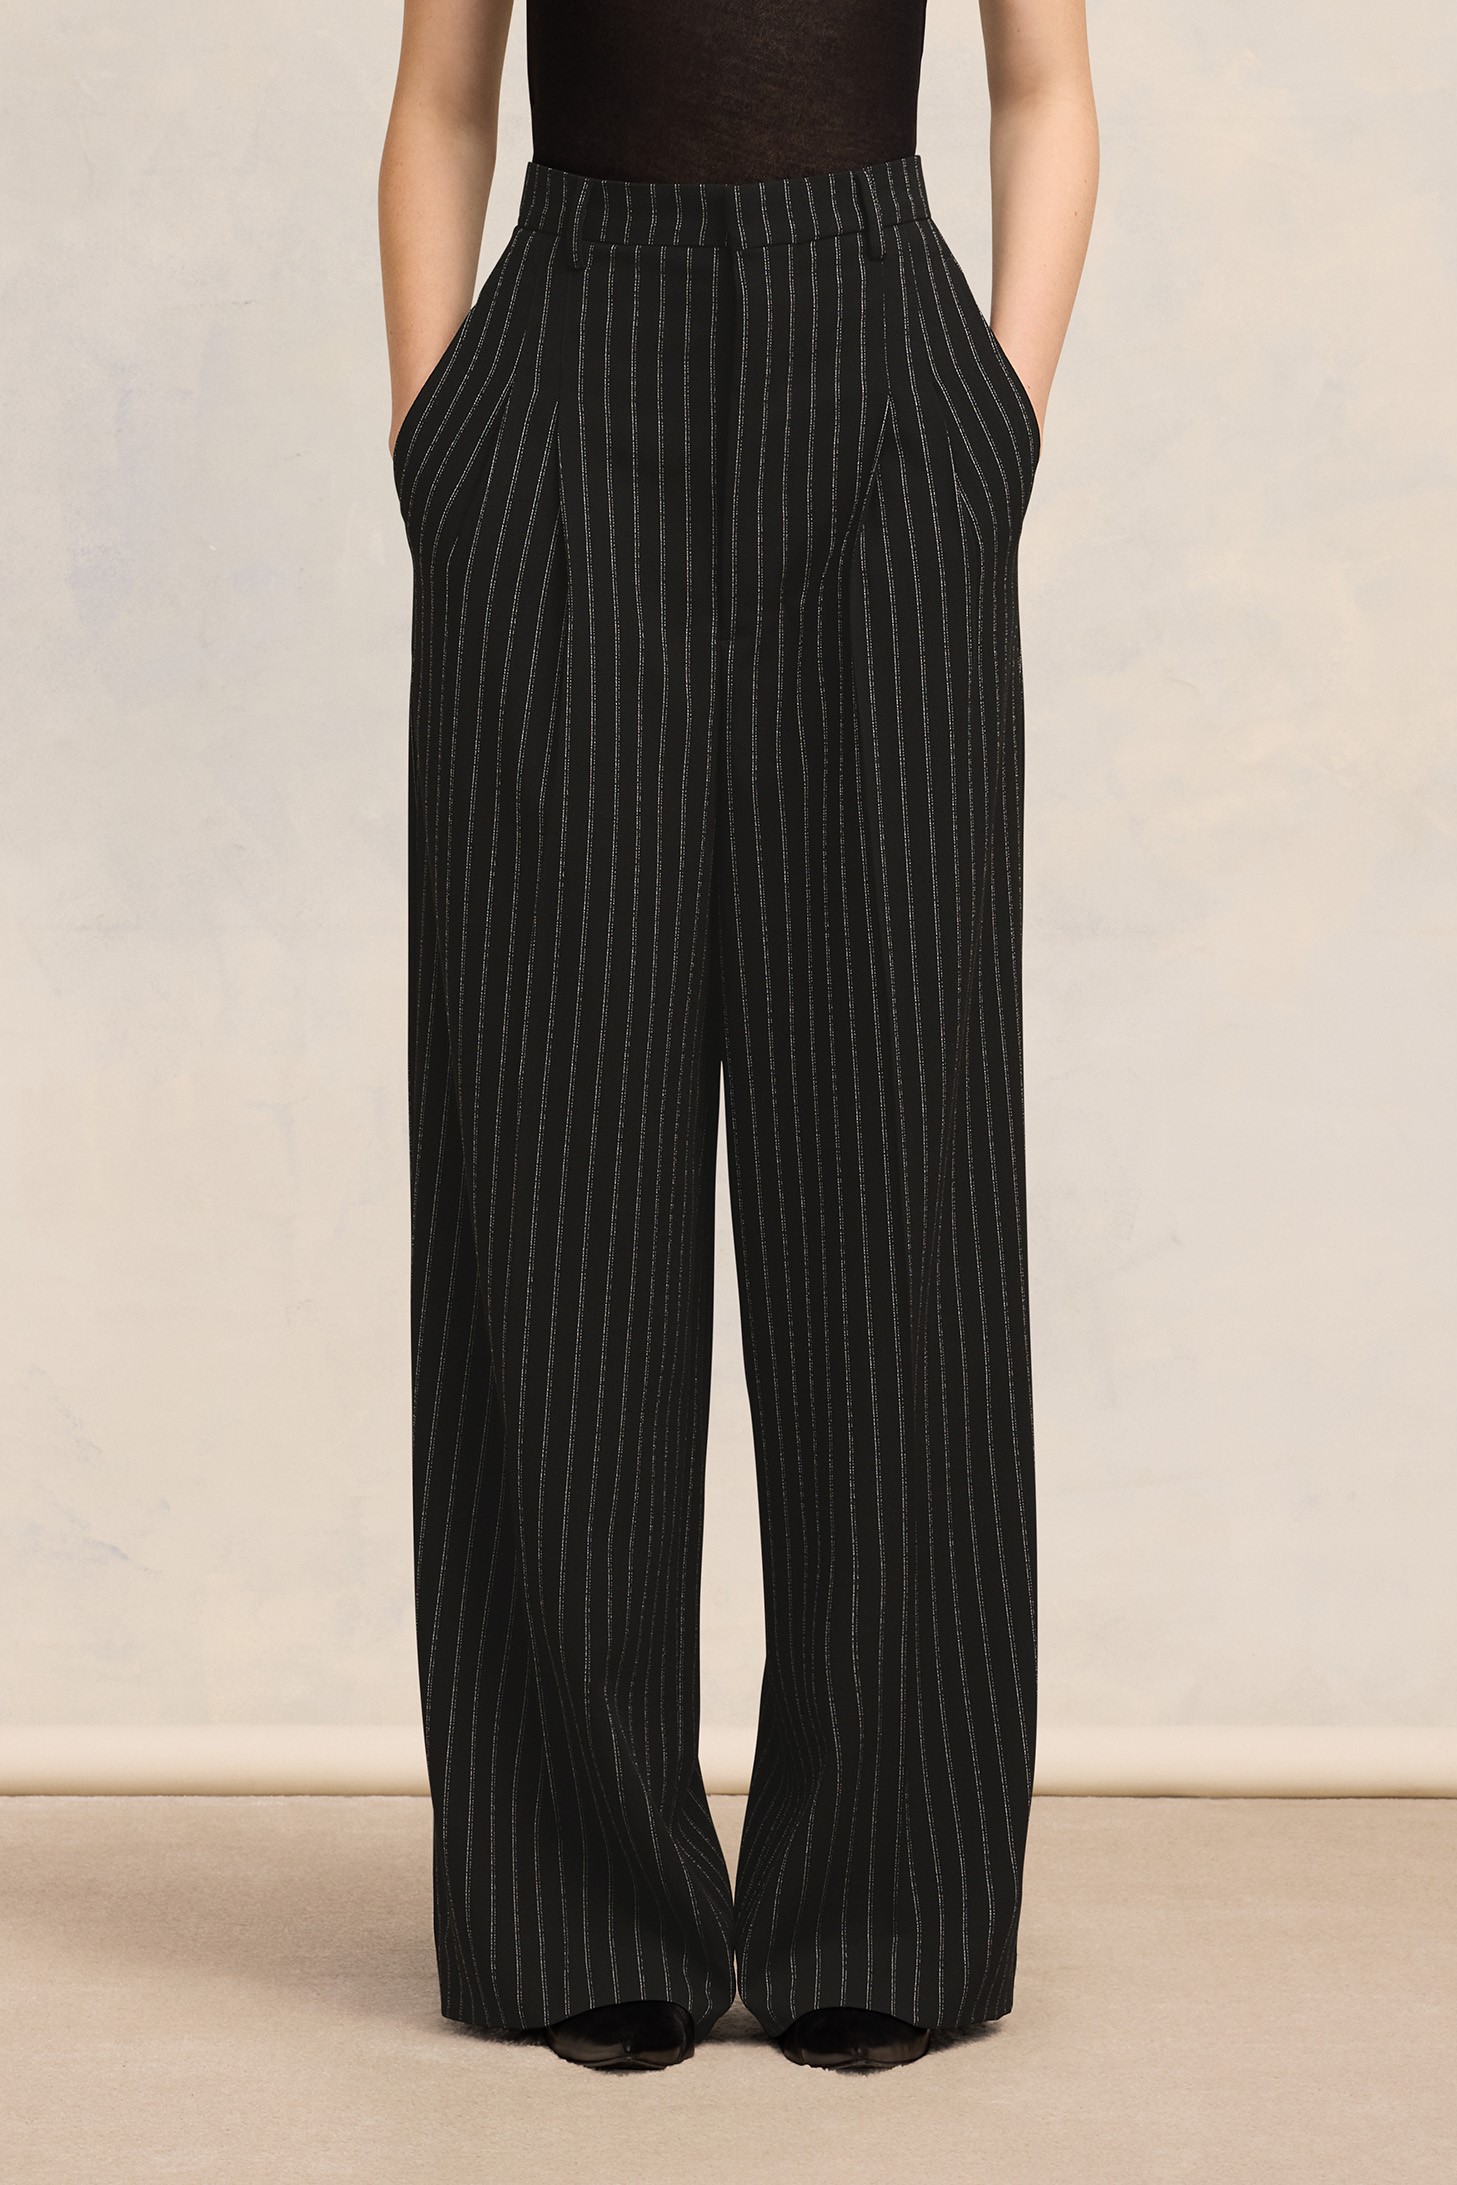 AMI PARIS High Waist Large Trouser in Black/Chalk FR38 / DE36